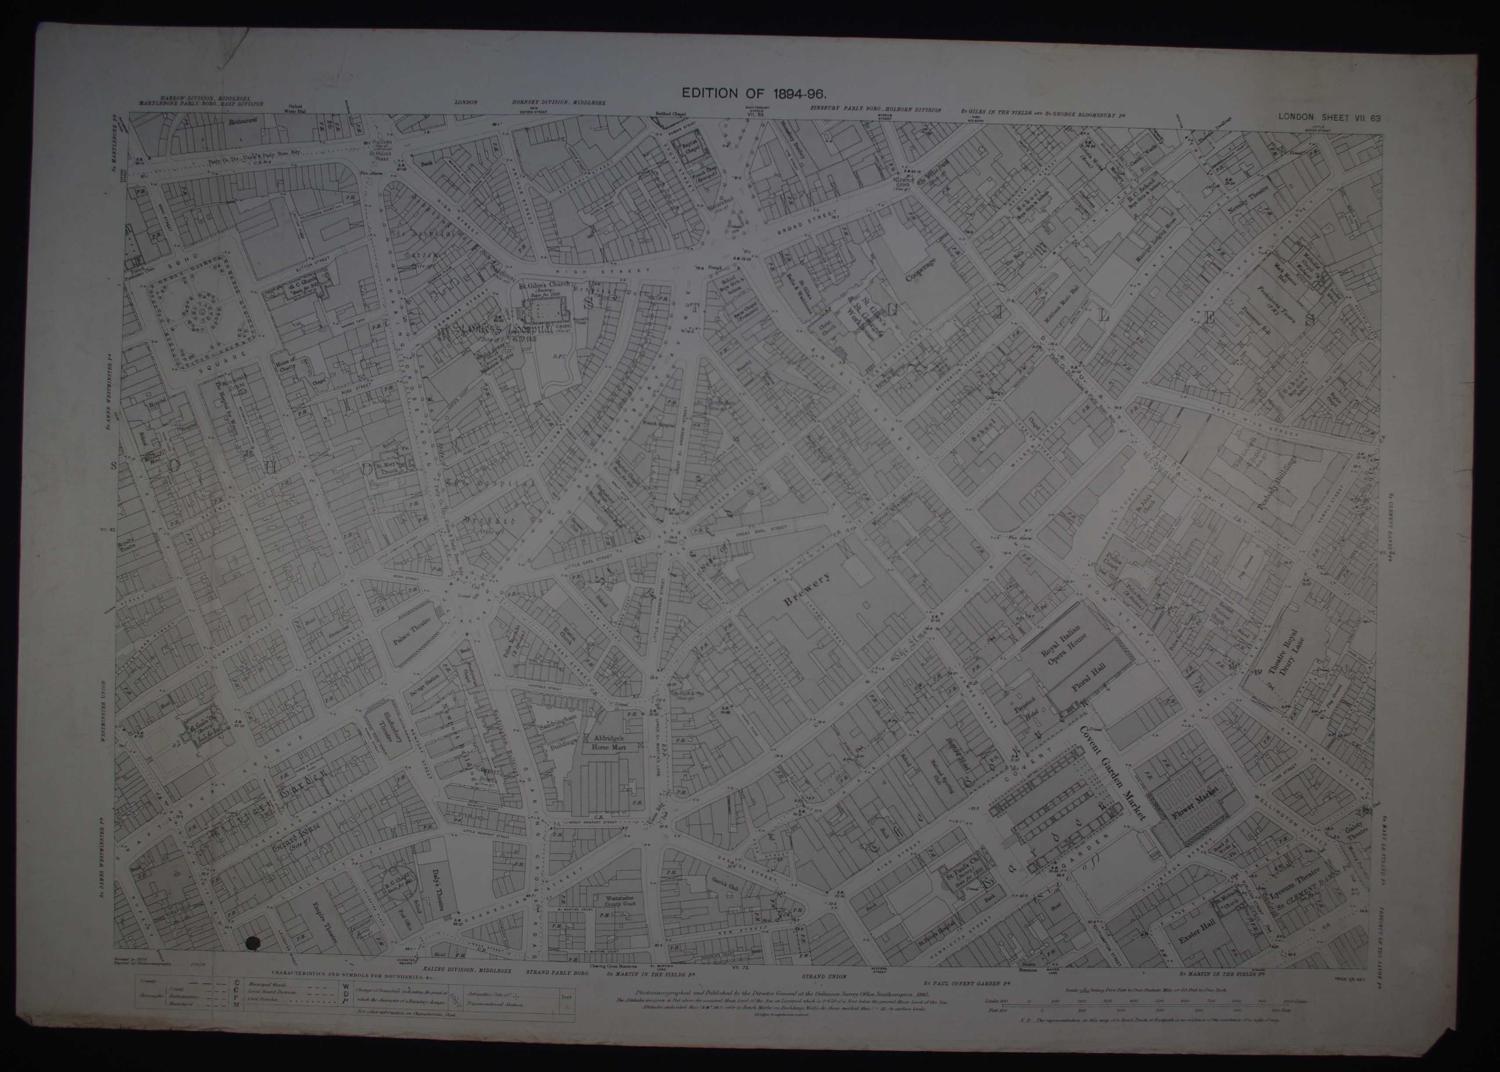 London. Sheet VII. 63 by Ordnance Survey Edition of 1894-96